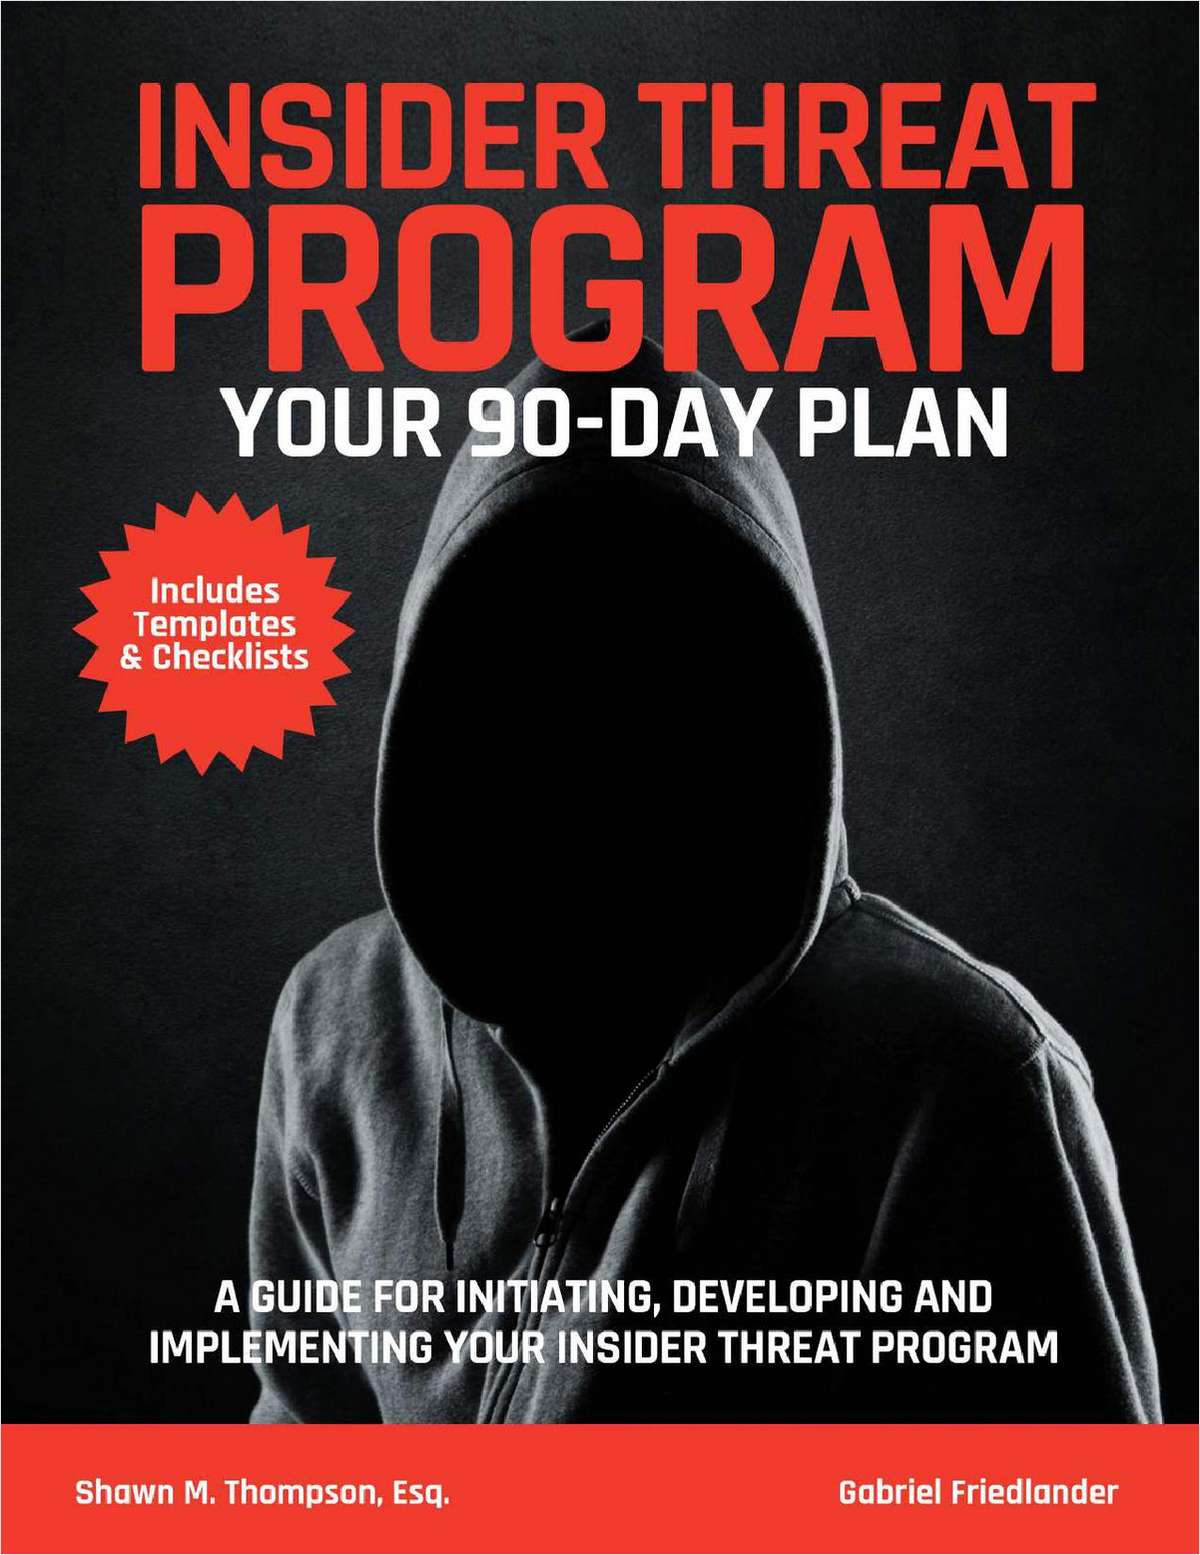 Build An Insider Threat Program in 90 Days, Free ObserveIT eBook